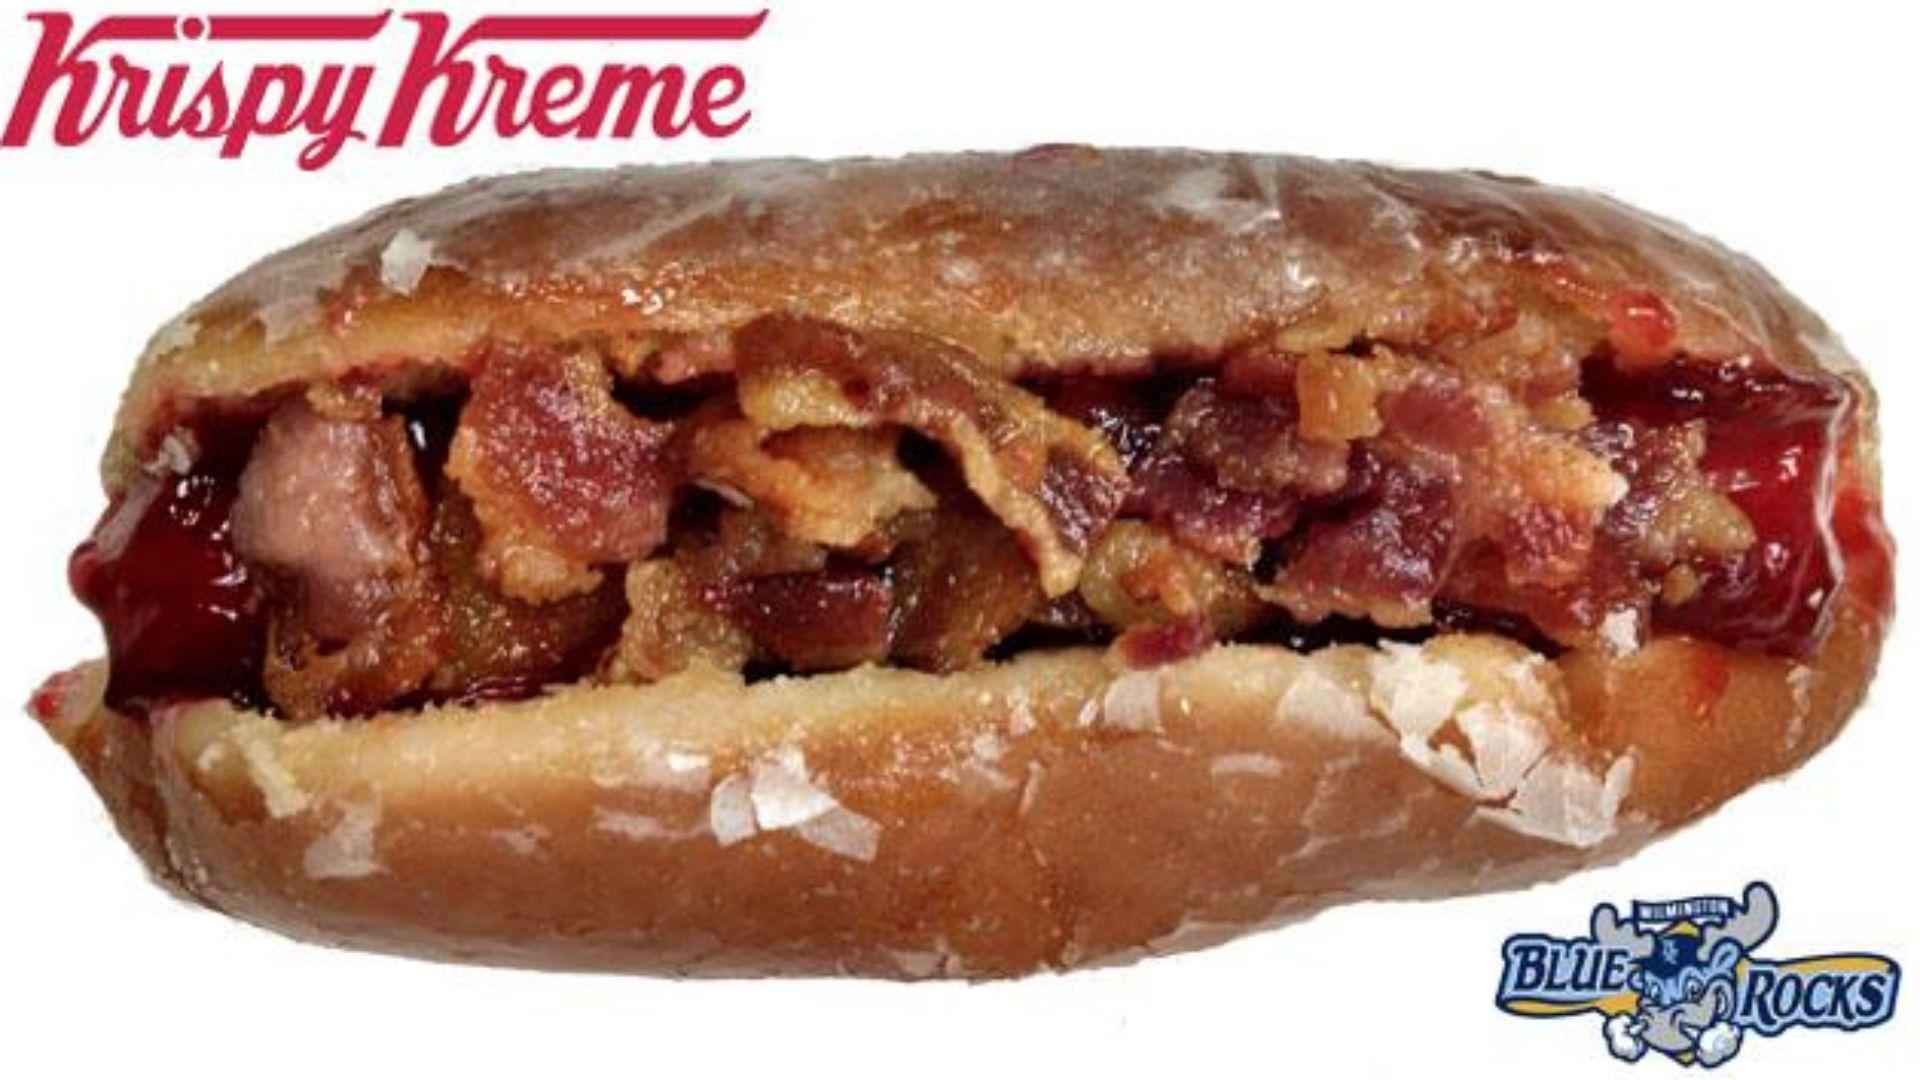 Minor league baseball team introduces 'The Krispy Kreme Donut Dog